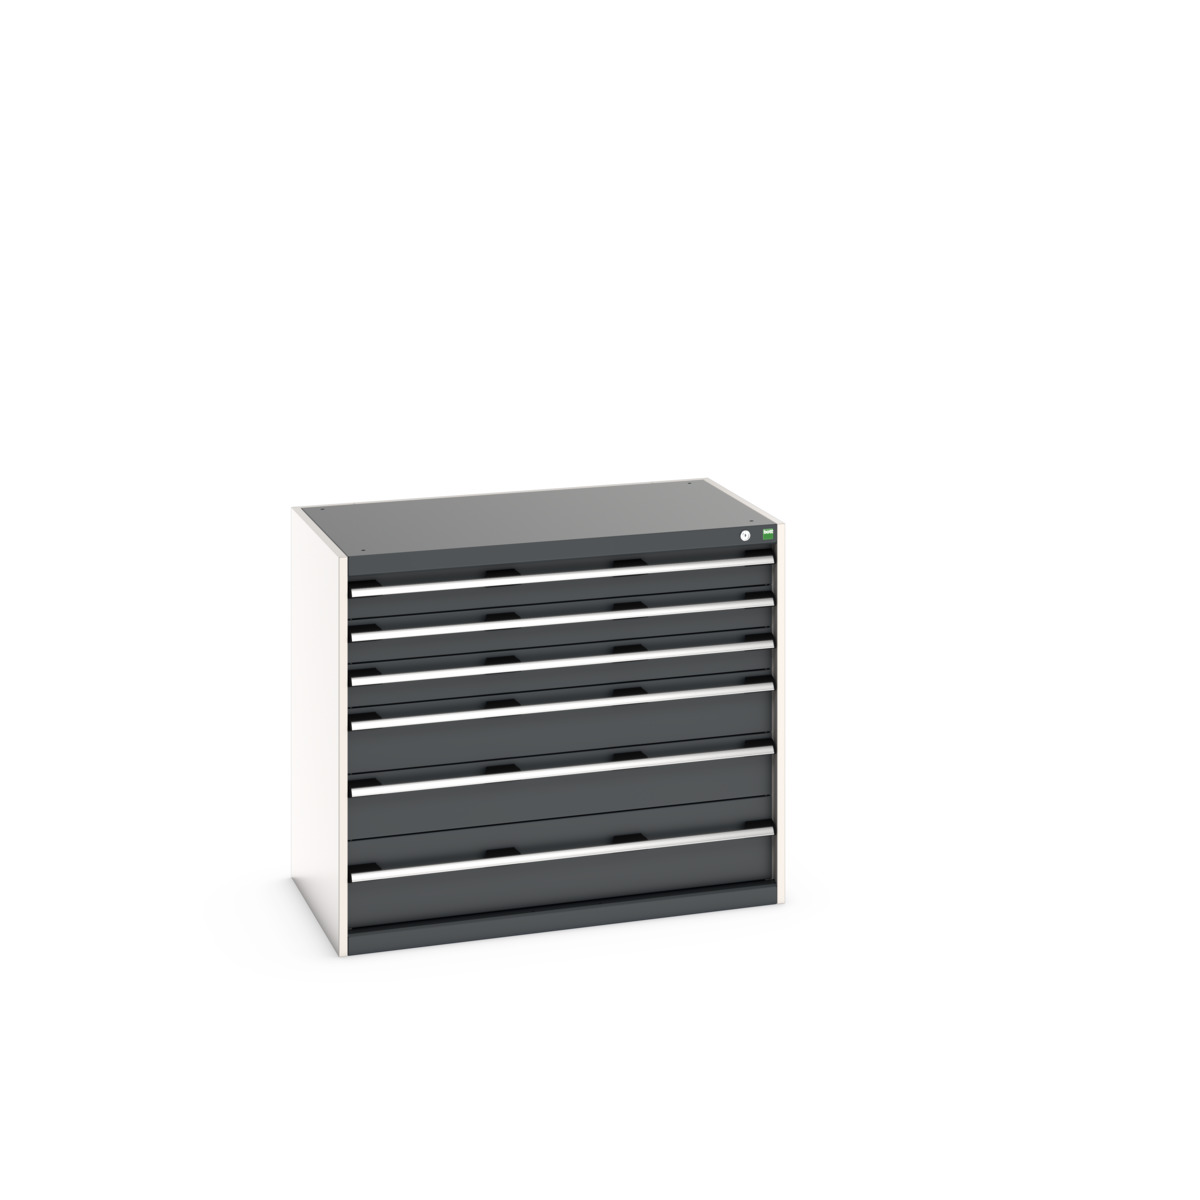 40021223. - cubio drawer cabinet